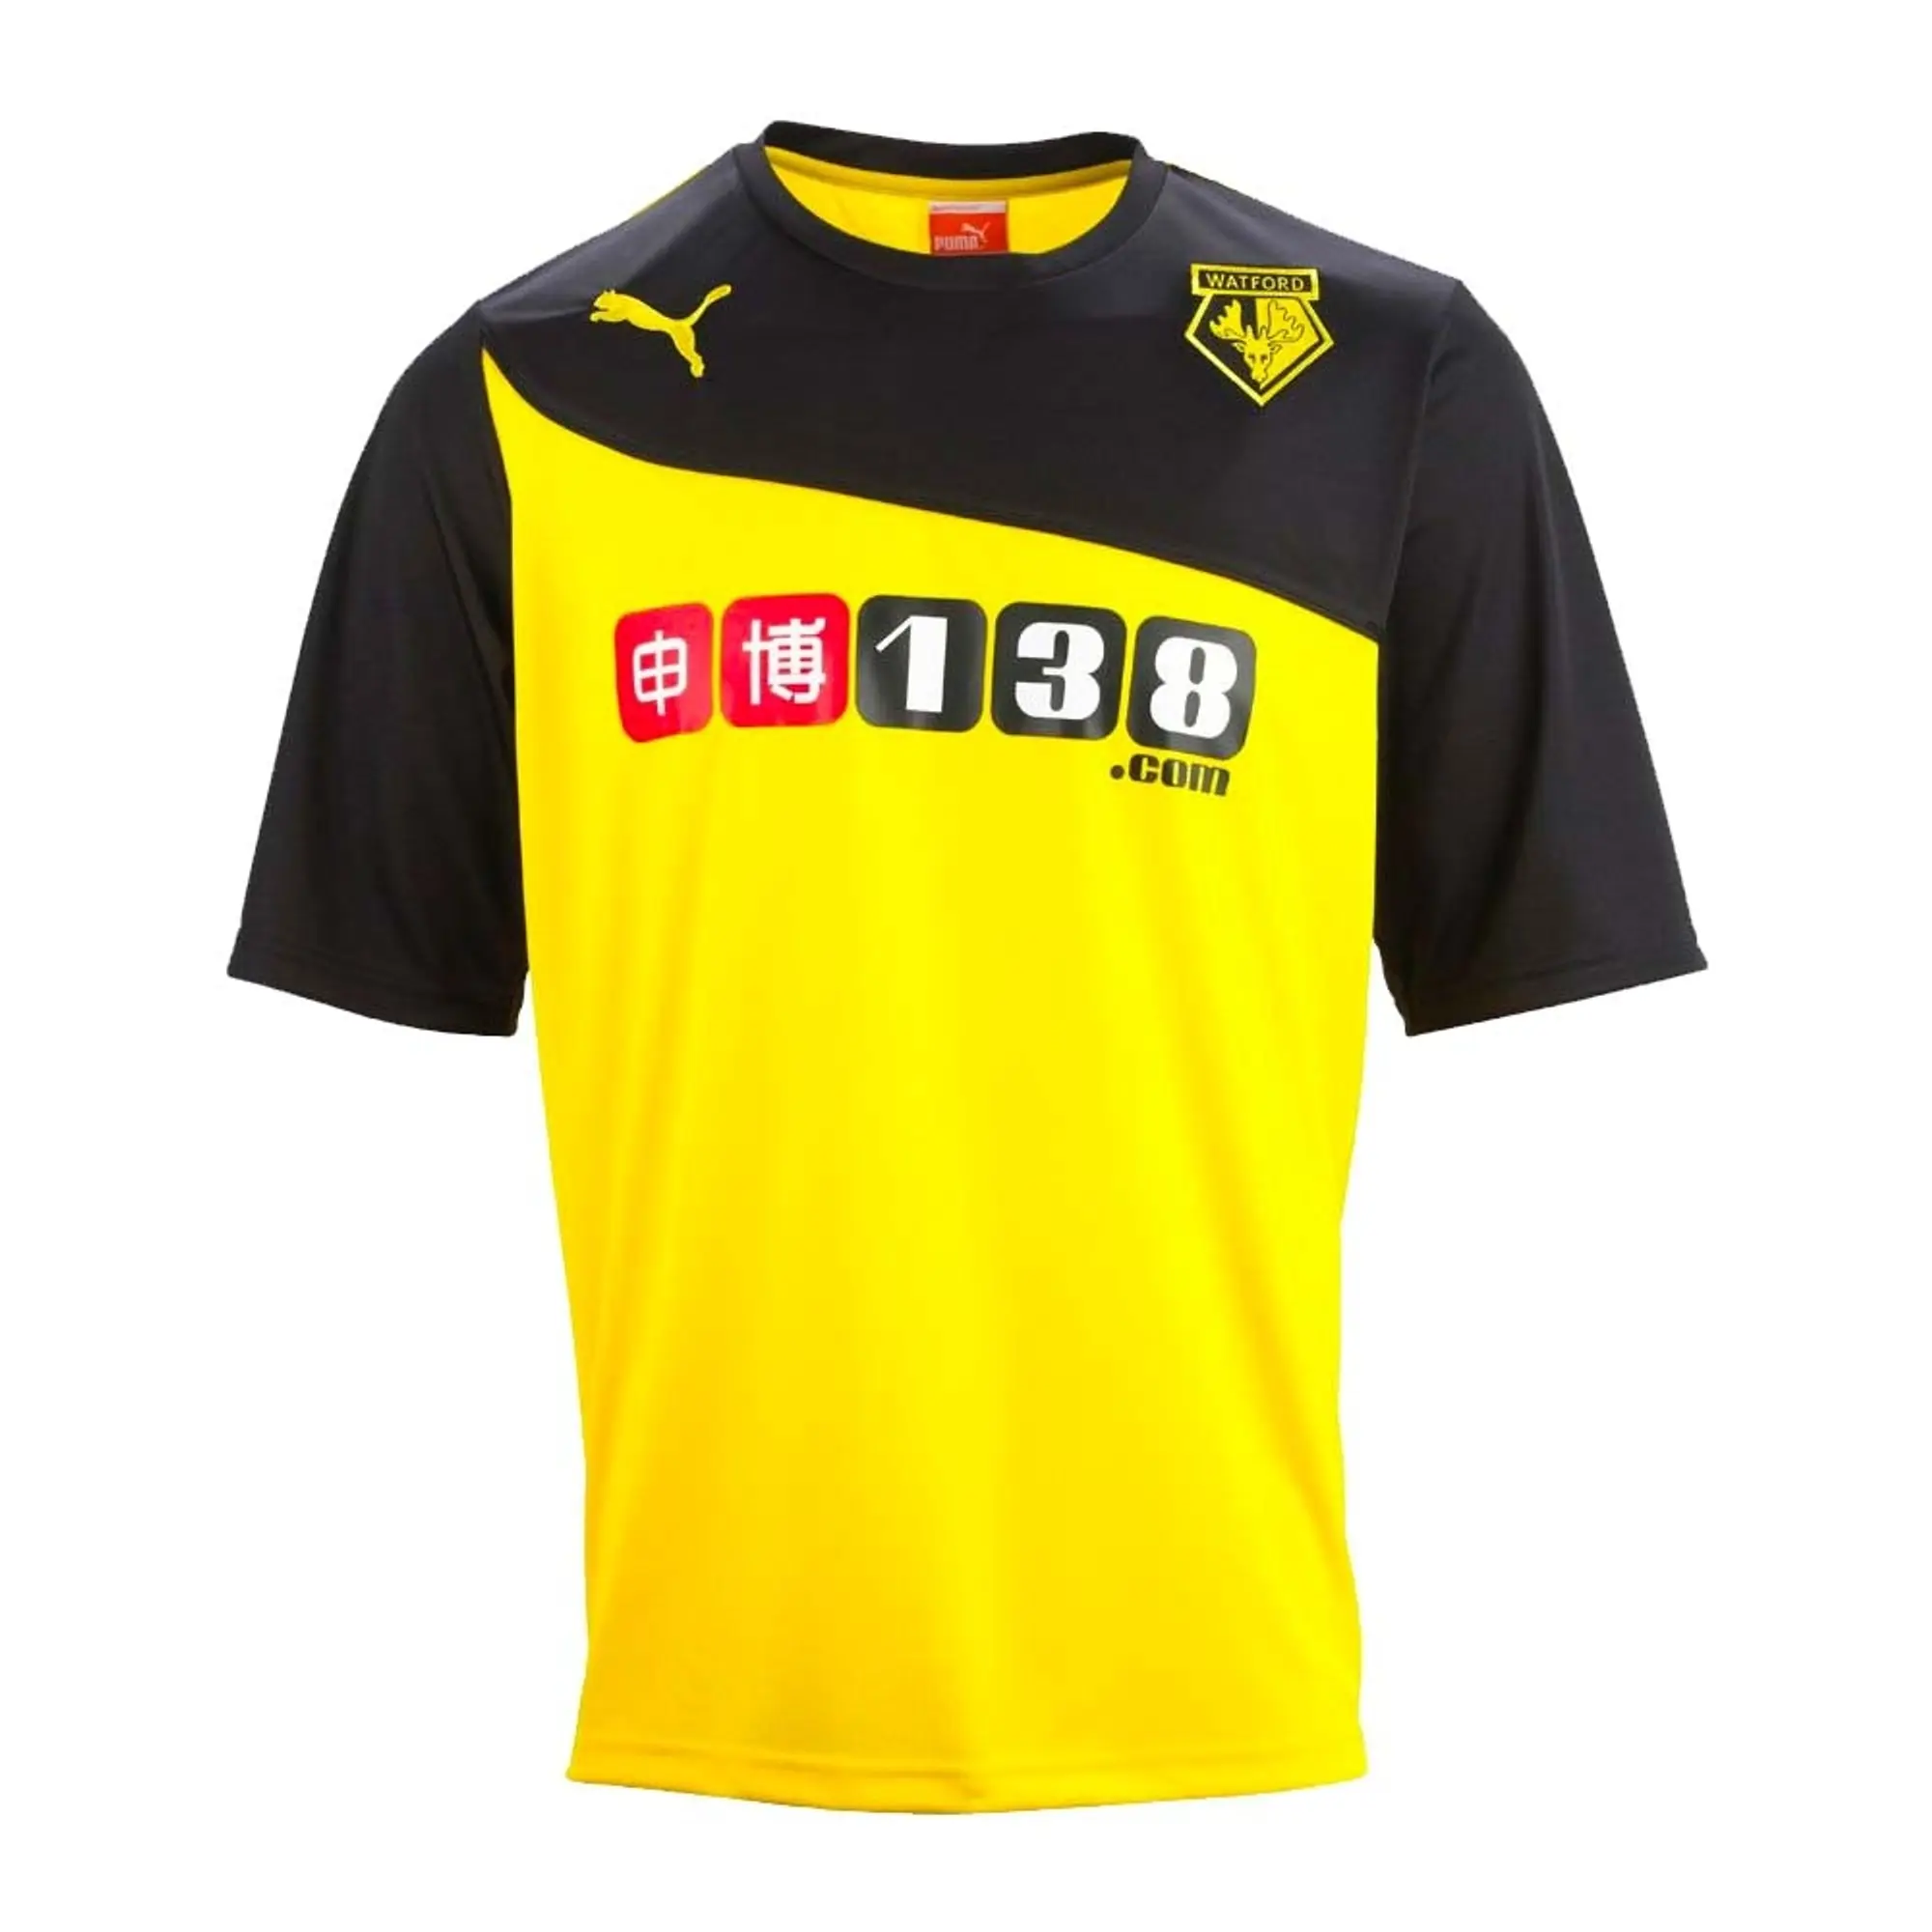 2013-14 Tottenham Hotspur Under Armour Authentic Away Goalkeeper Shirt -  Uksoccershop